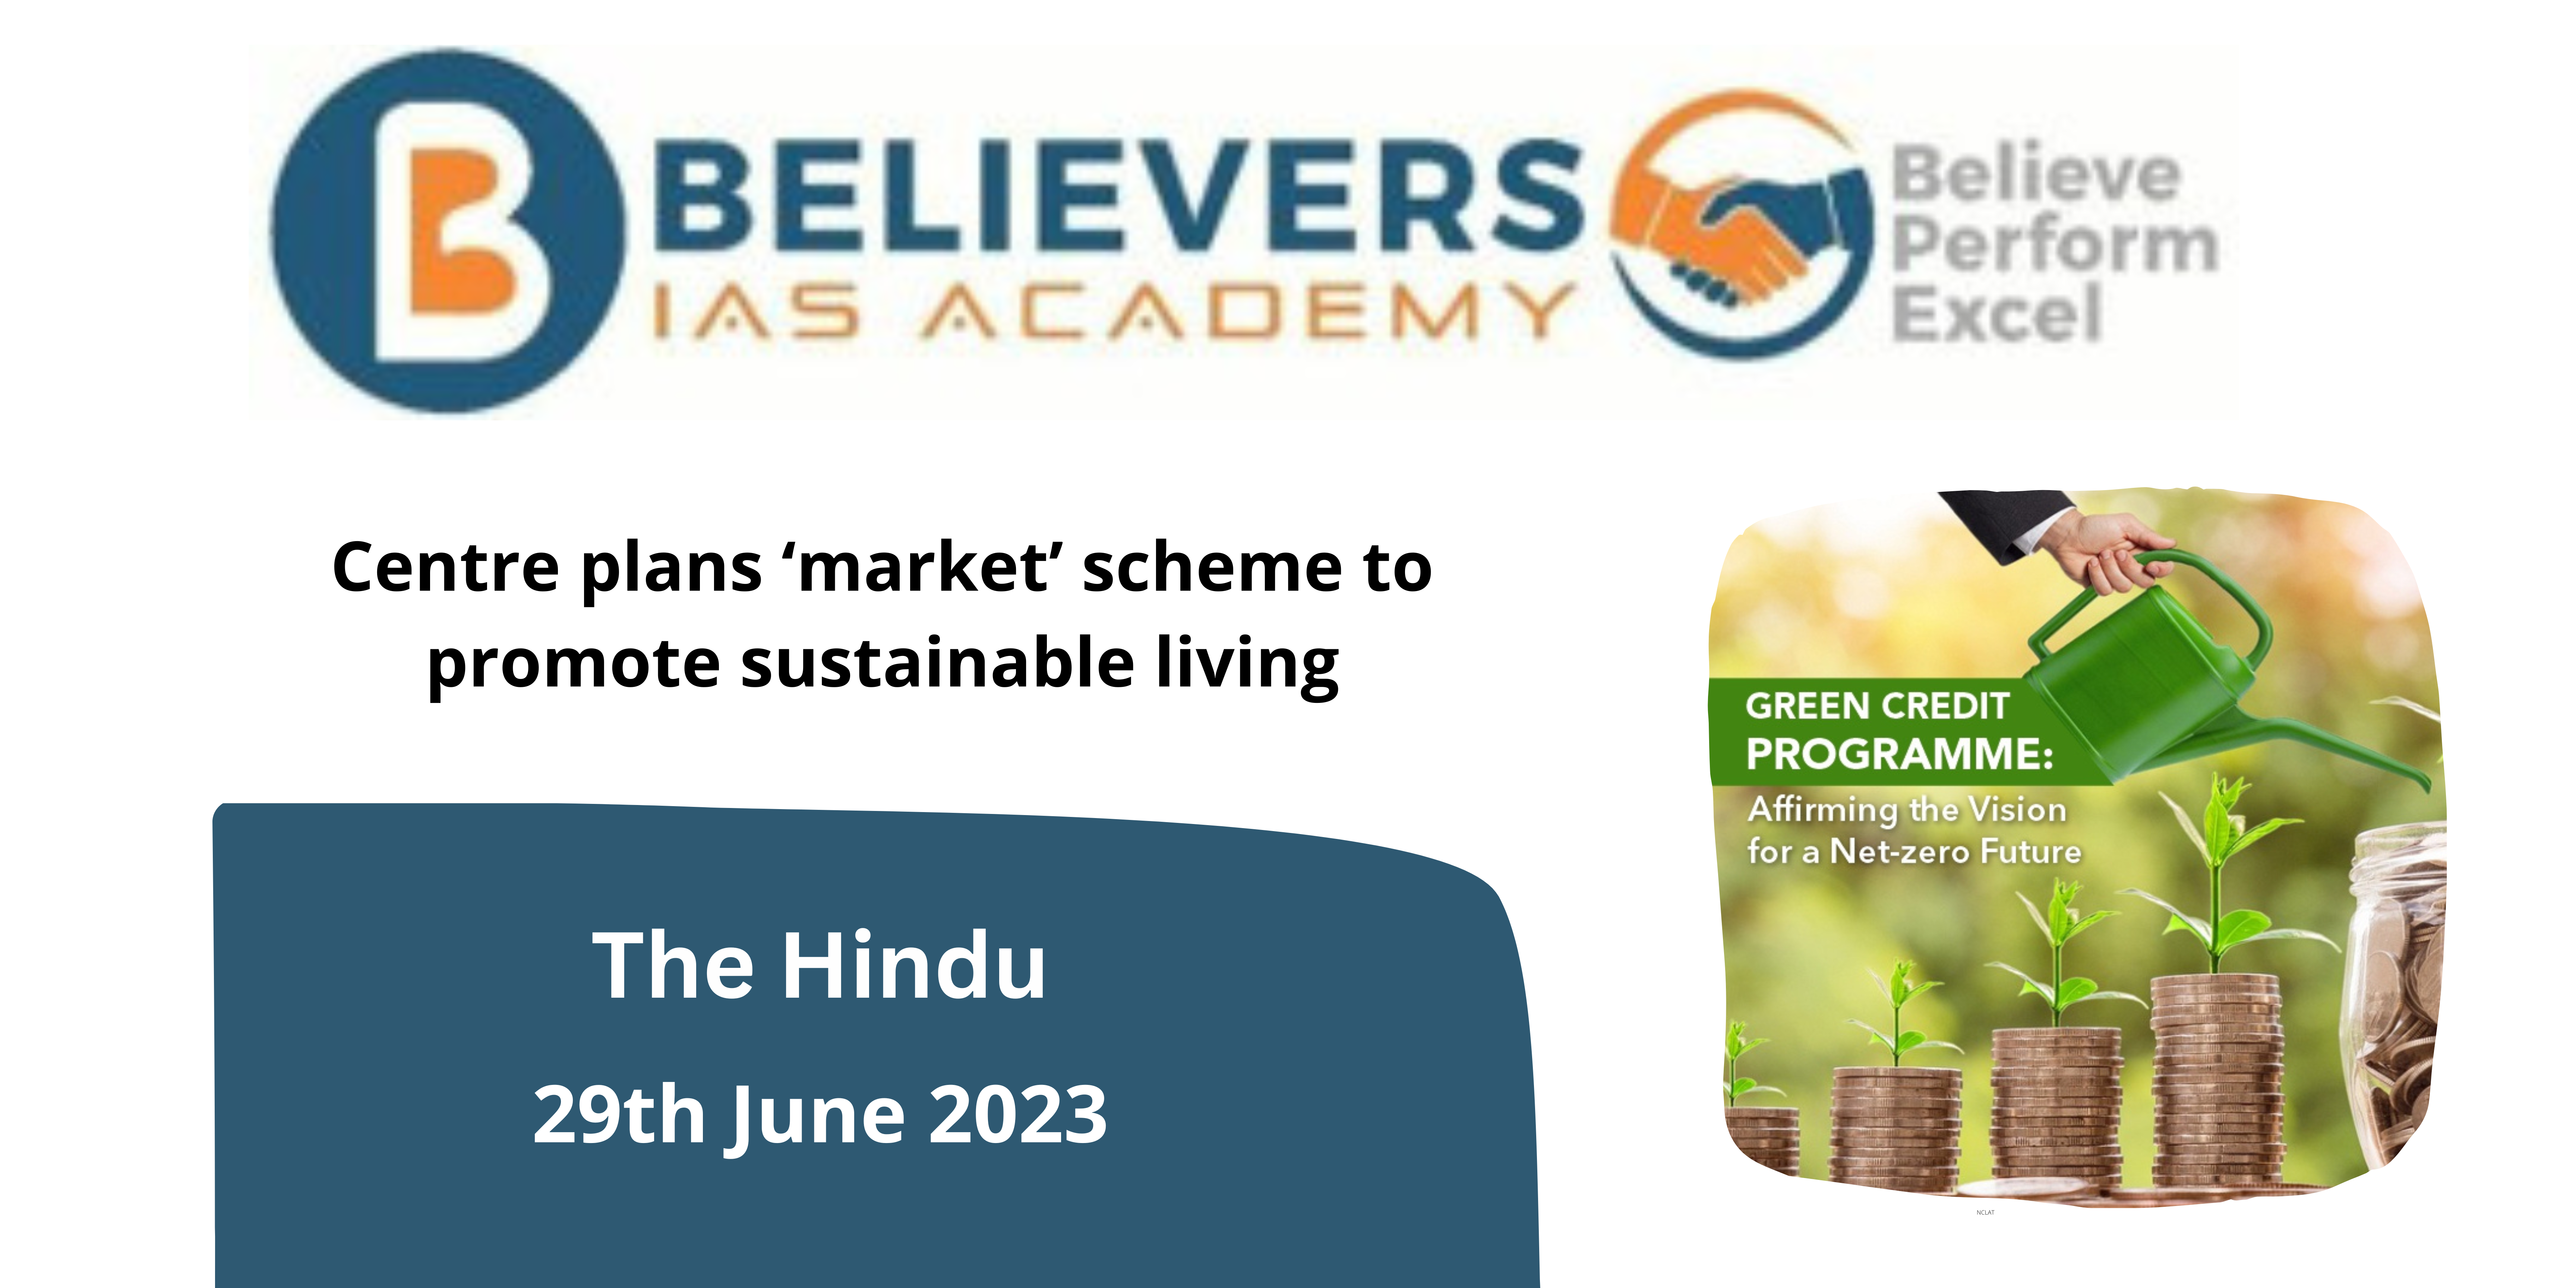 Promoting Sustainable Living: Centre's 'Market' Scheme